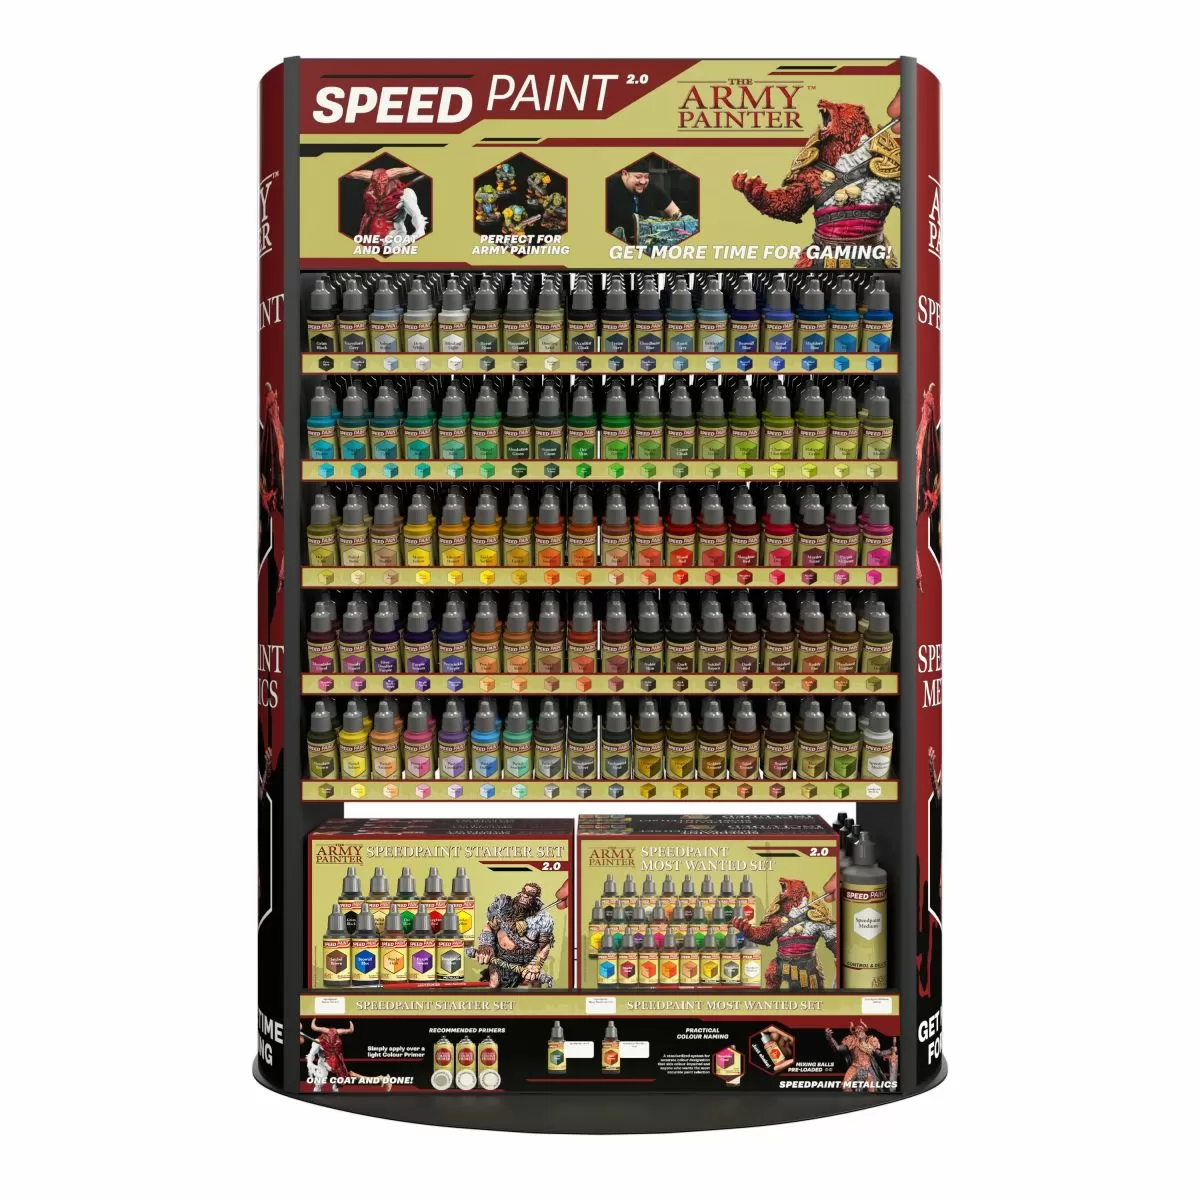 Army Painter Speedpaint Starter Set 2.0